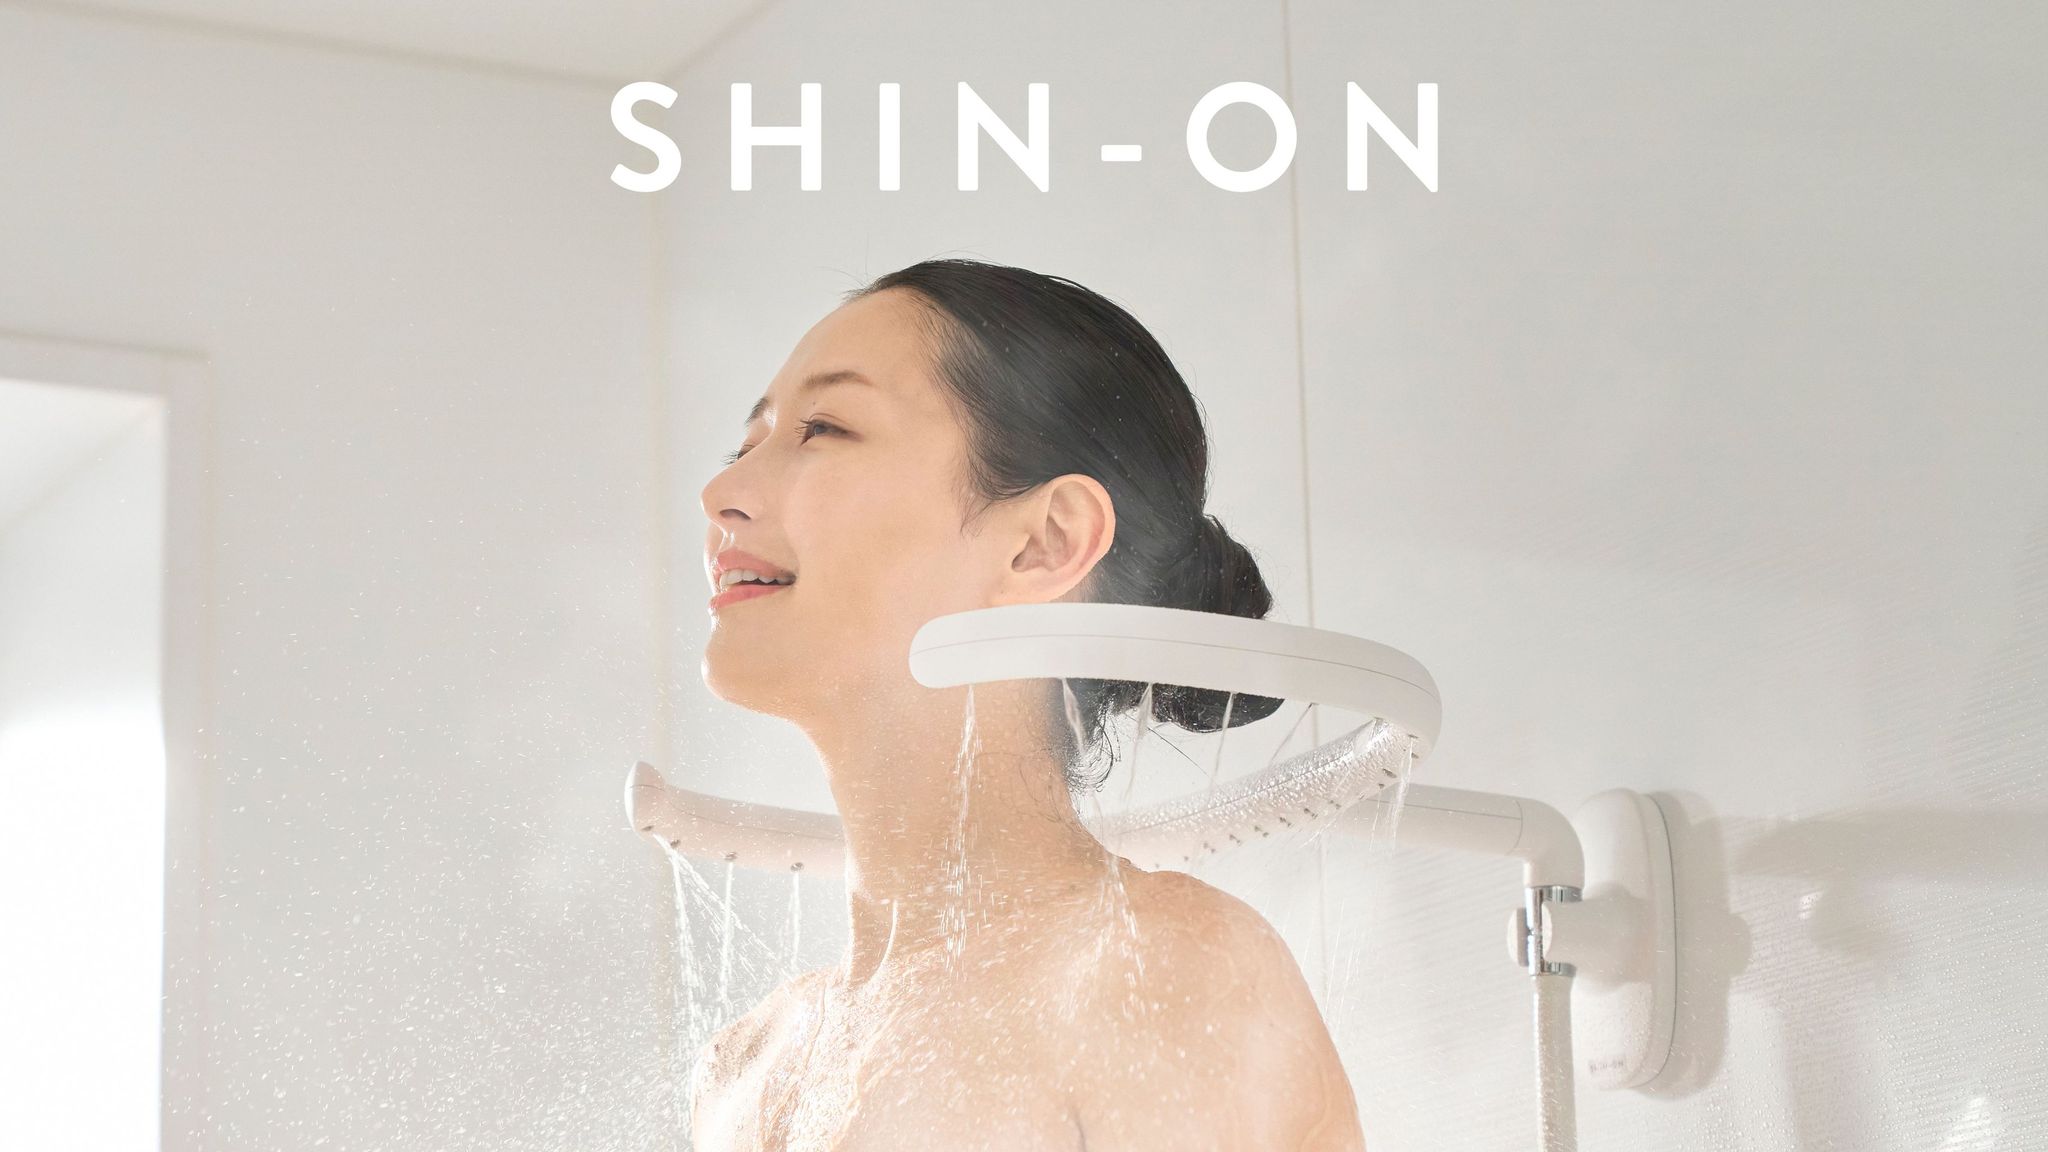 TVでも紹介された、身体を温める未来型シャワー 360度お湯に包まれる「SHIN-ON」が一般販売開始 サムネイル画像